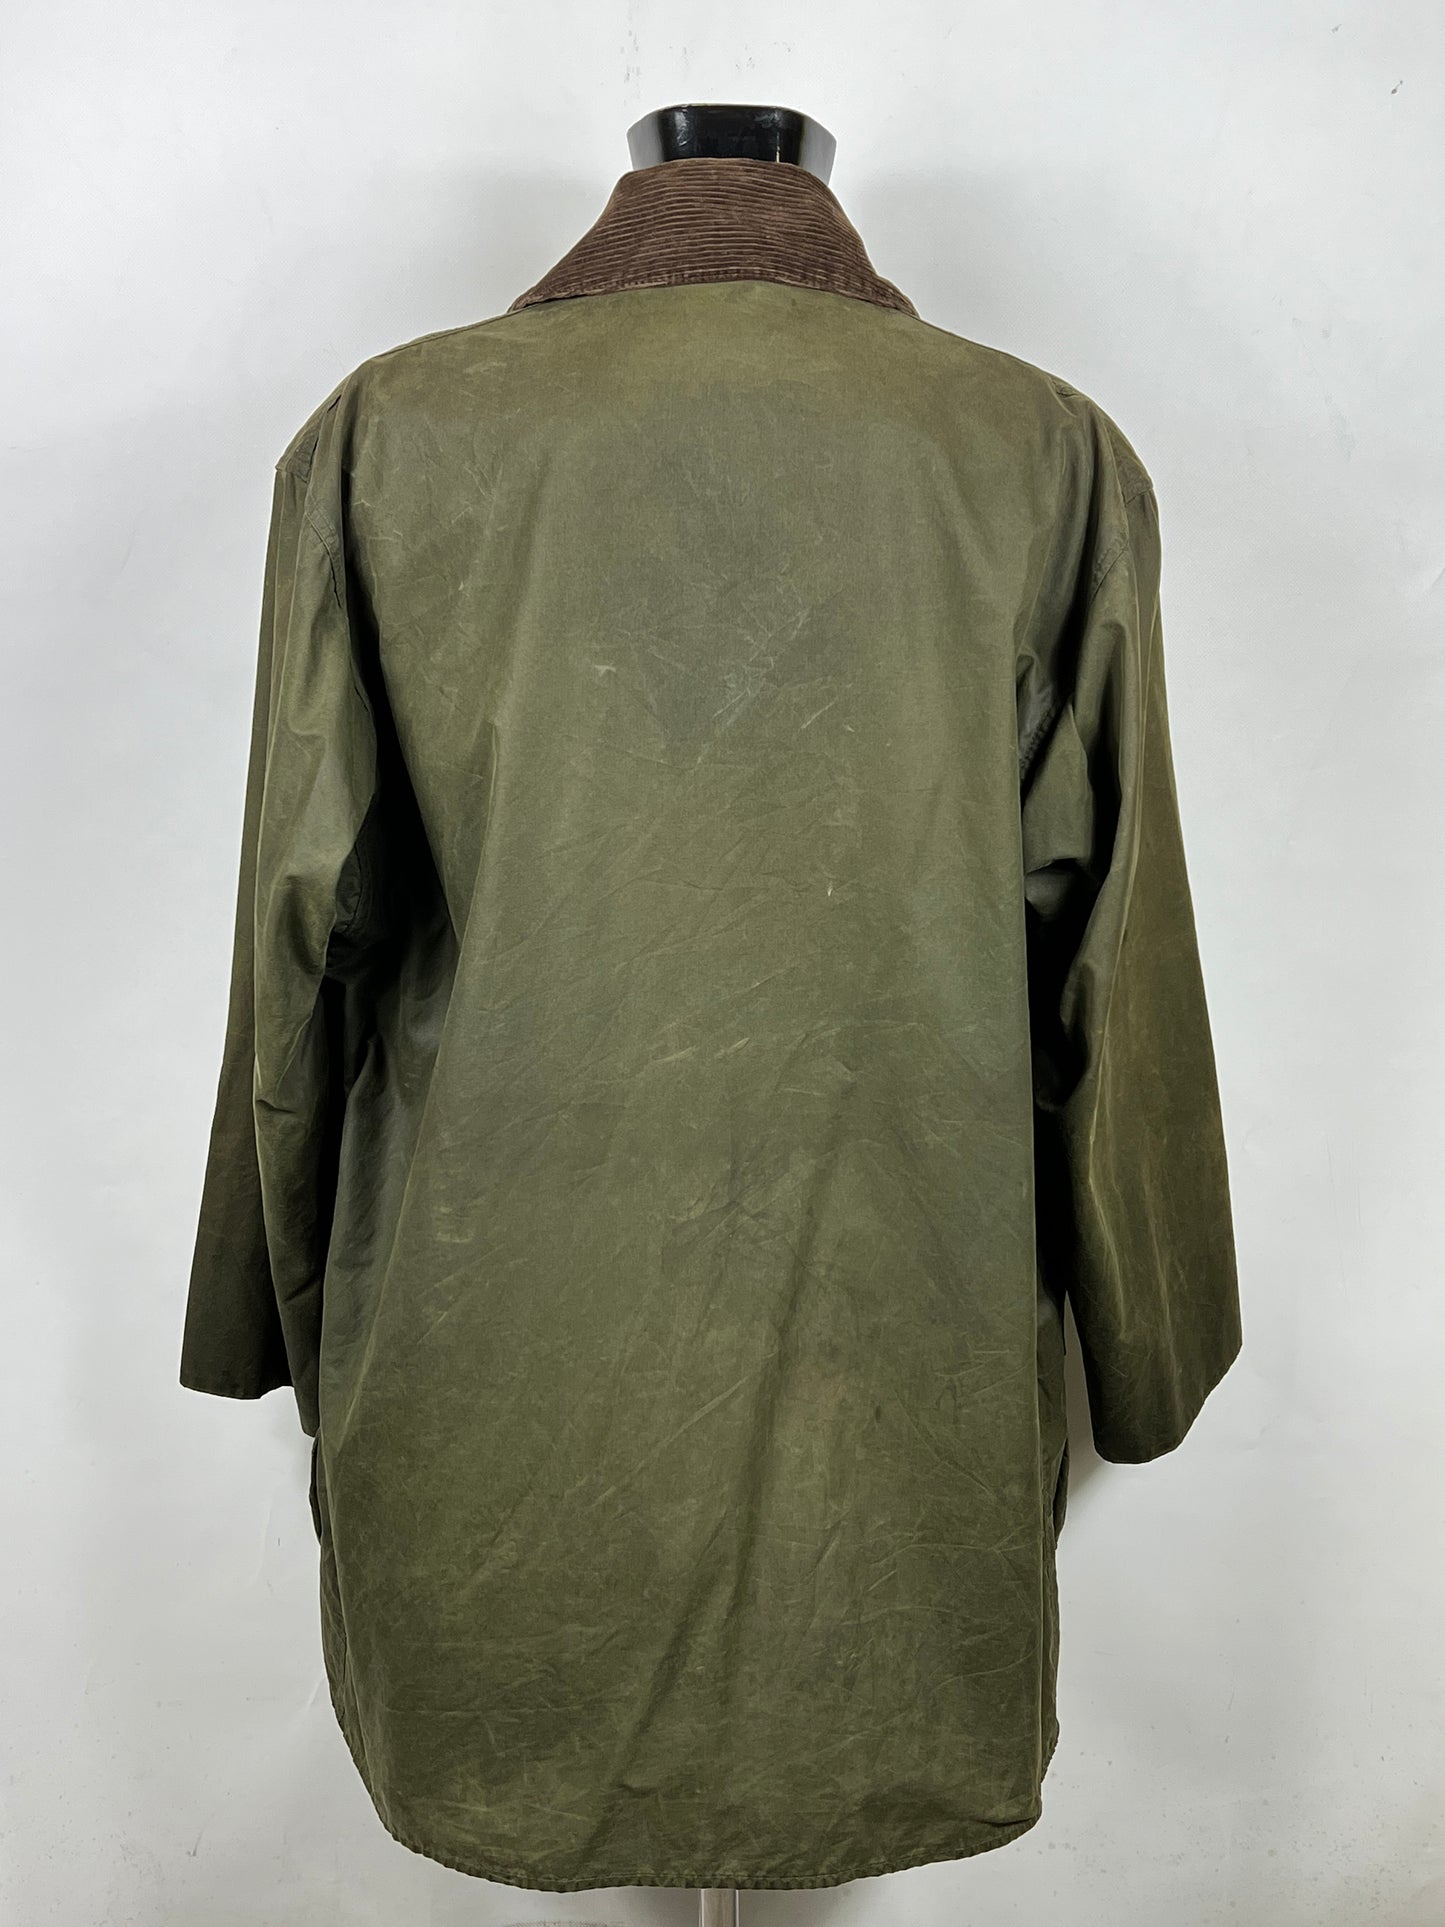 Barbour Border Verde vintage cotone Cerato C44/46 Green Border Coat Size  XL